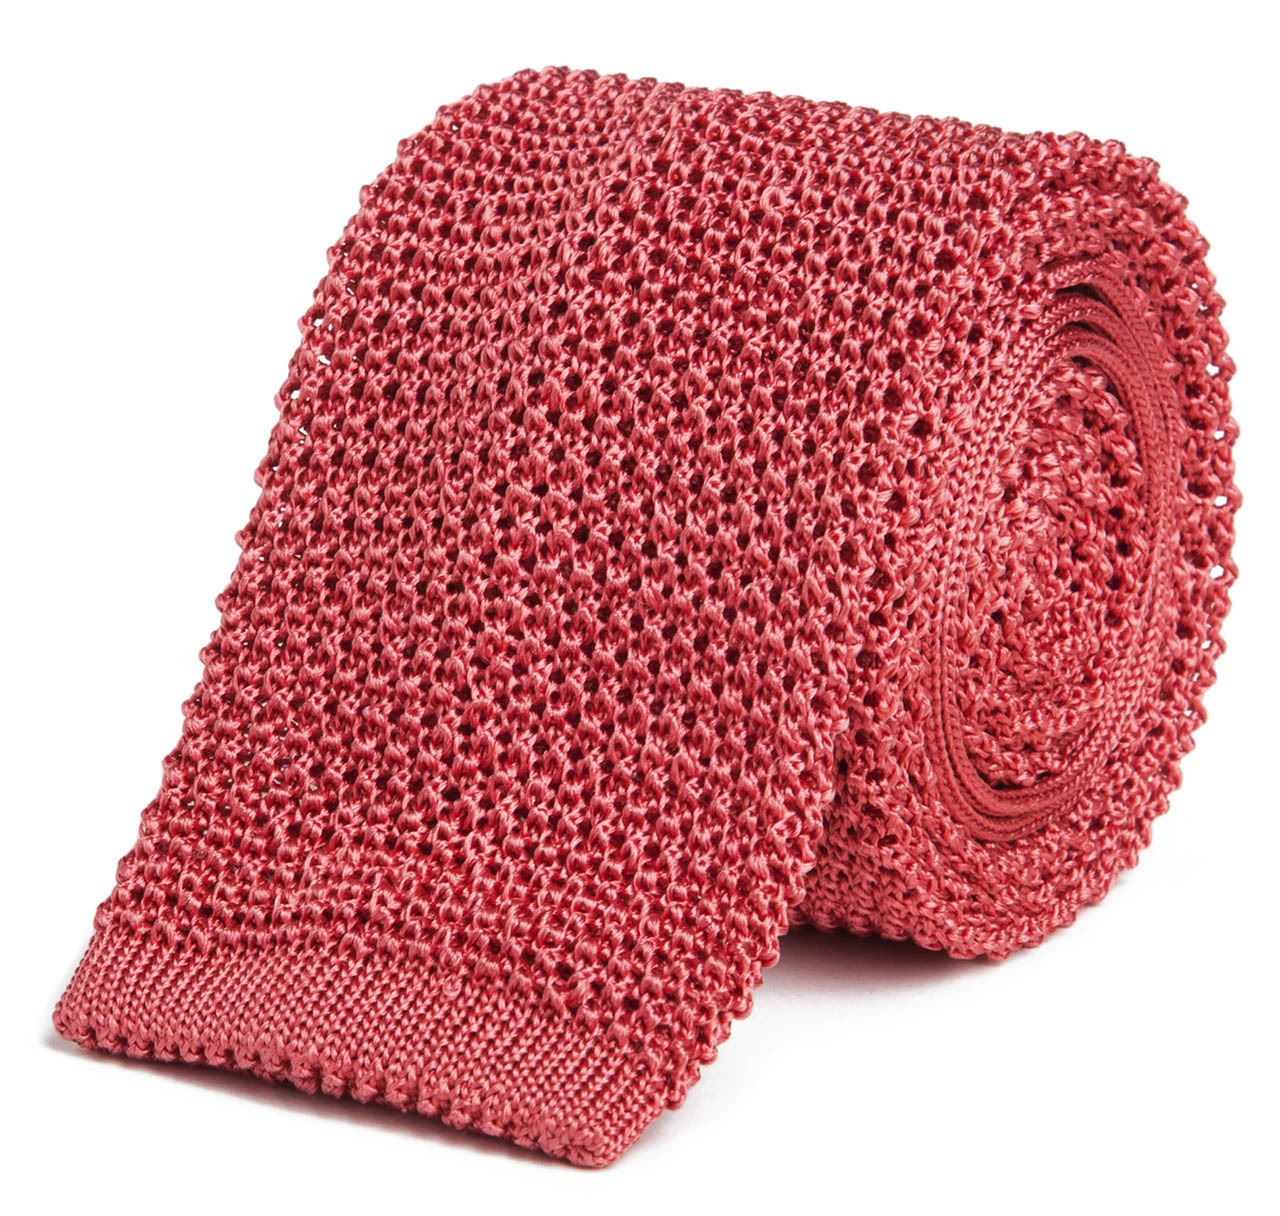 Sir Jack's Classic Knit Silk Tie in Rosé